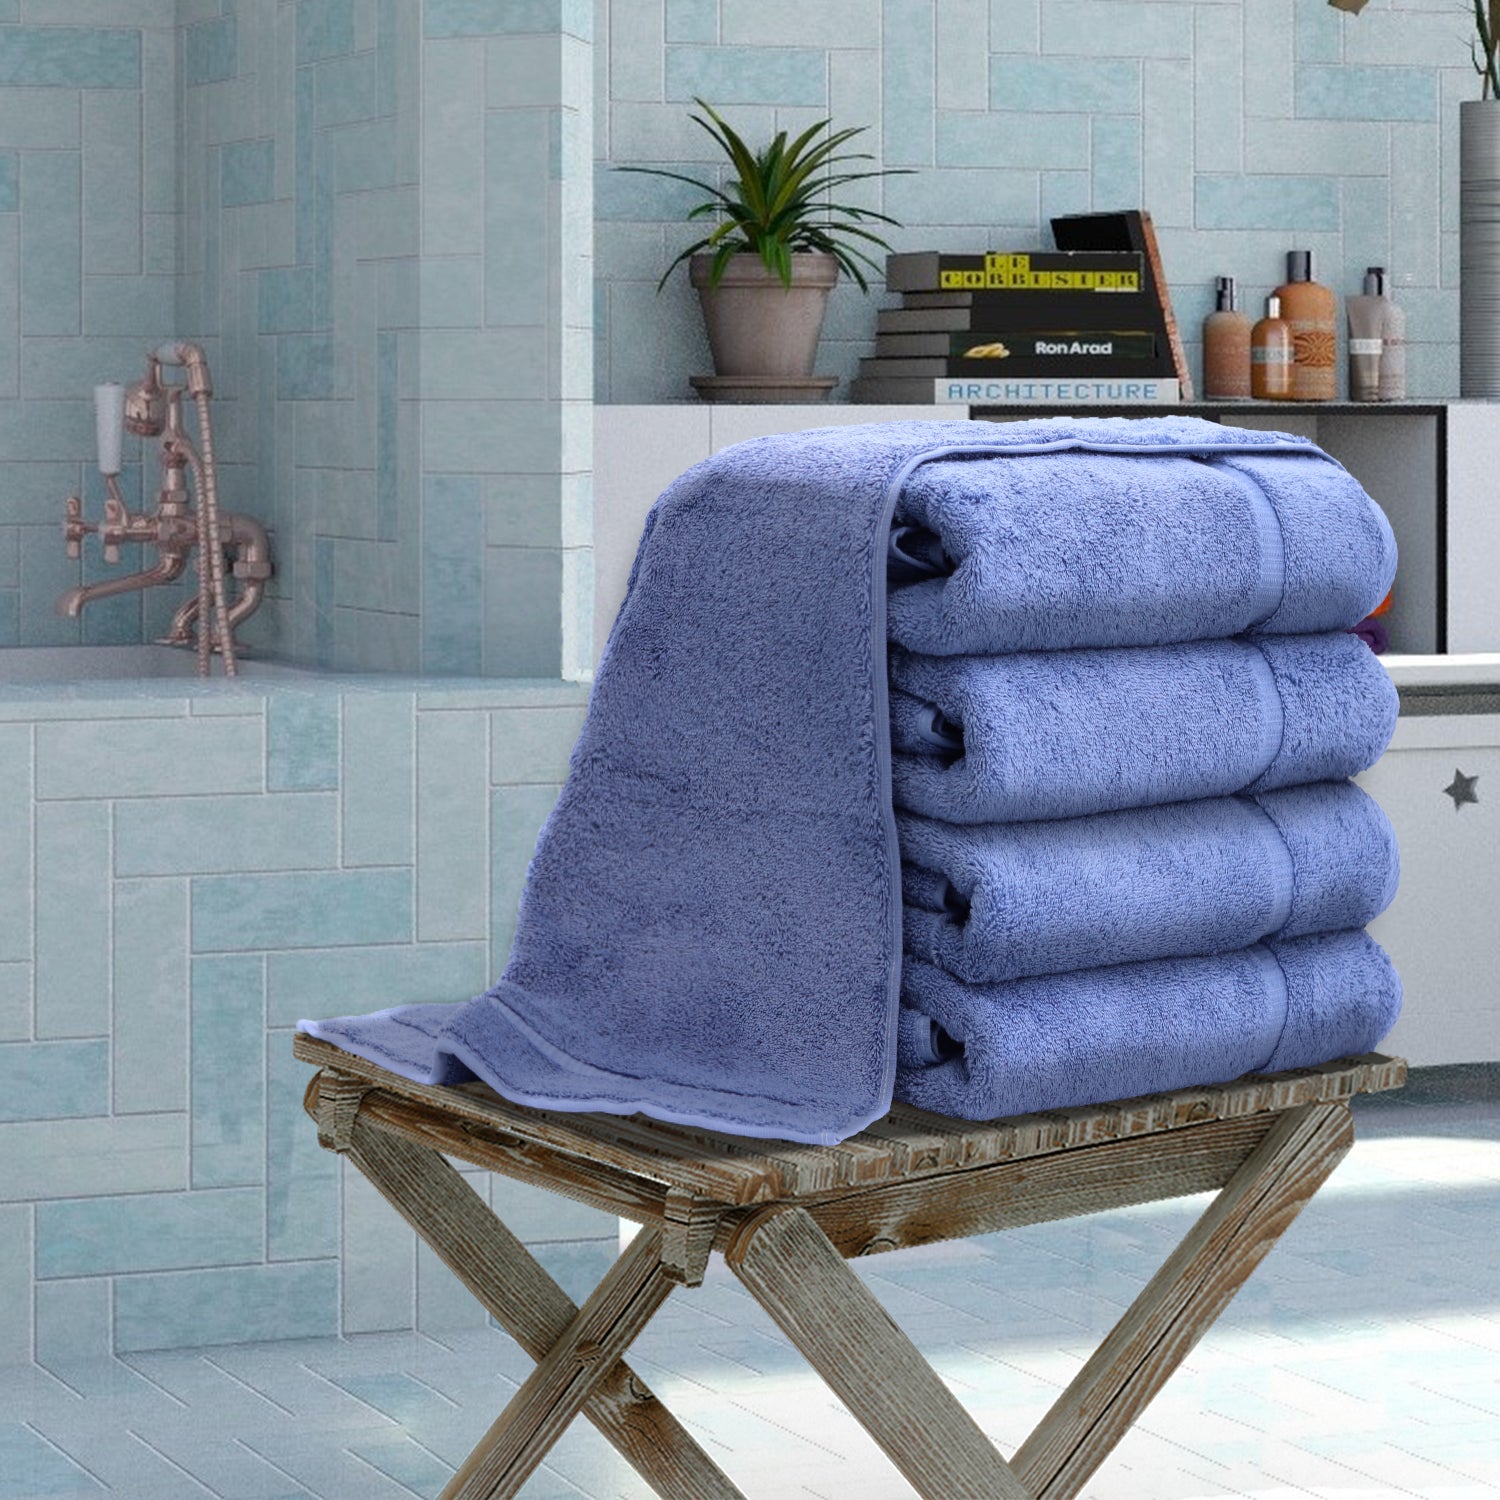 Luxury Turkish Cotton Bath Towel Set - 4-Piece XL Bath Towels (30x56),  Soft, Quick Dry, Absorbent - Beige/Blue, for Bathroom, Spa, Hotel